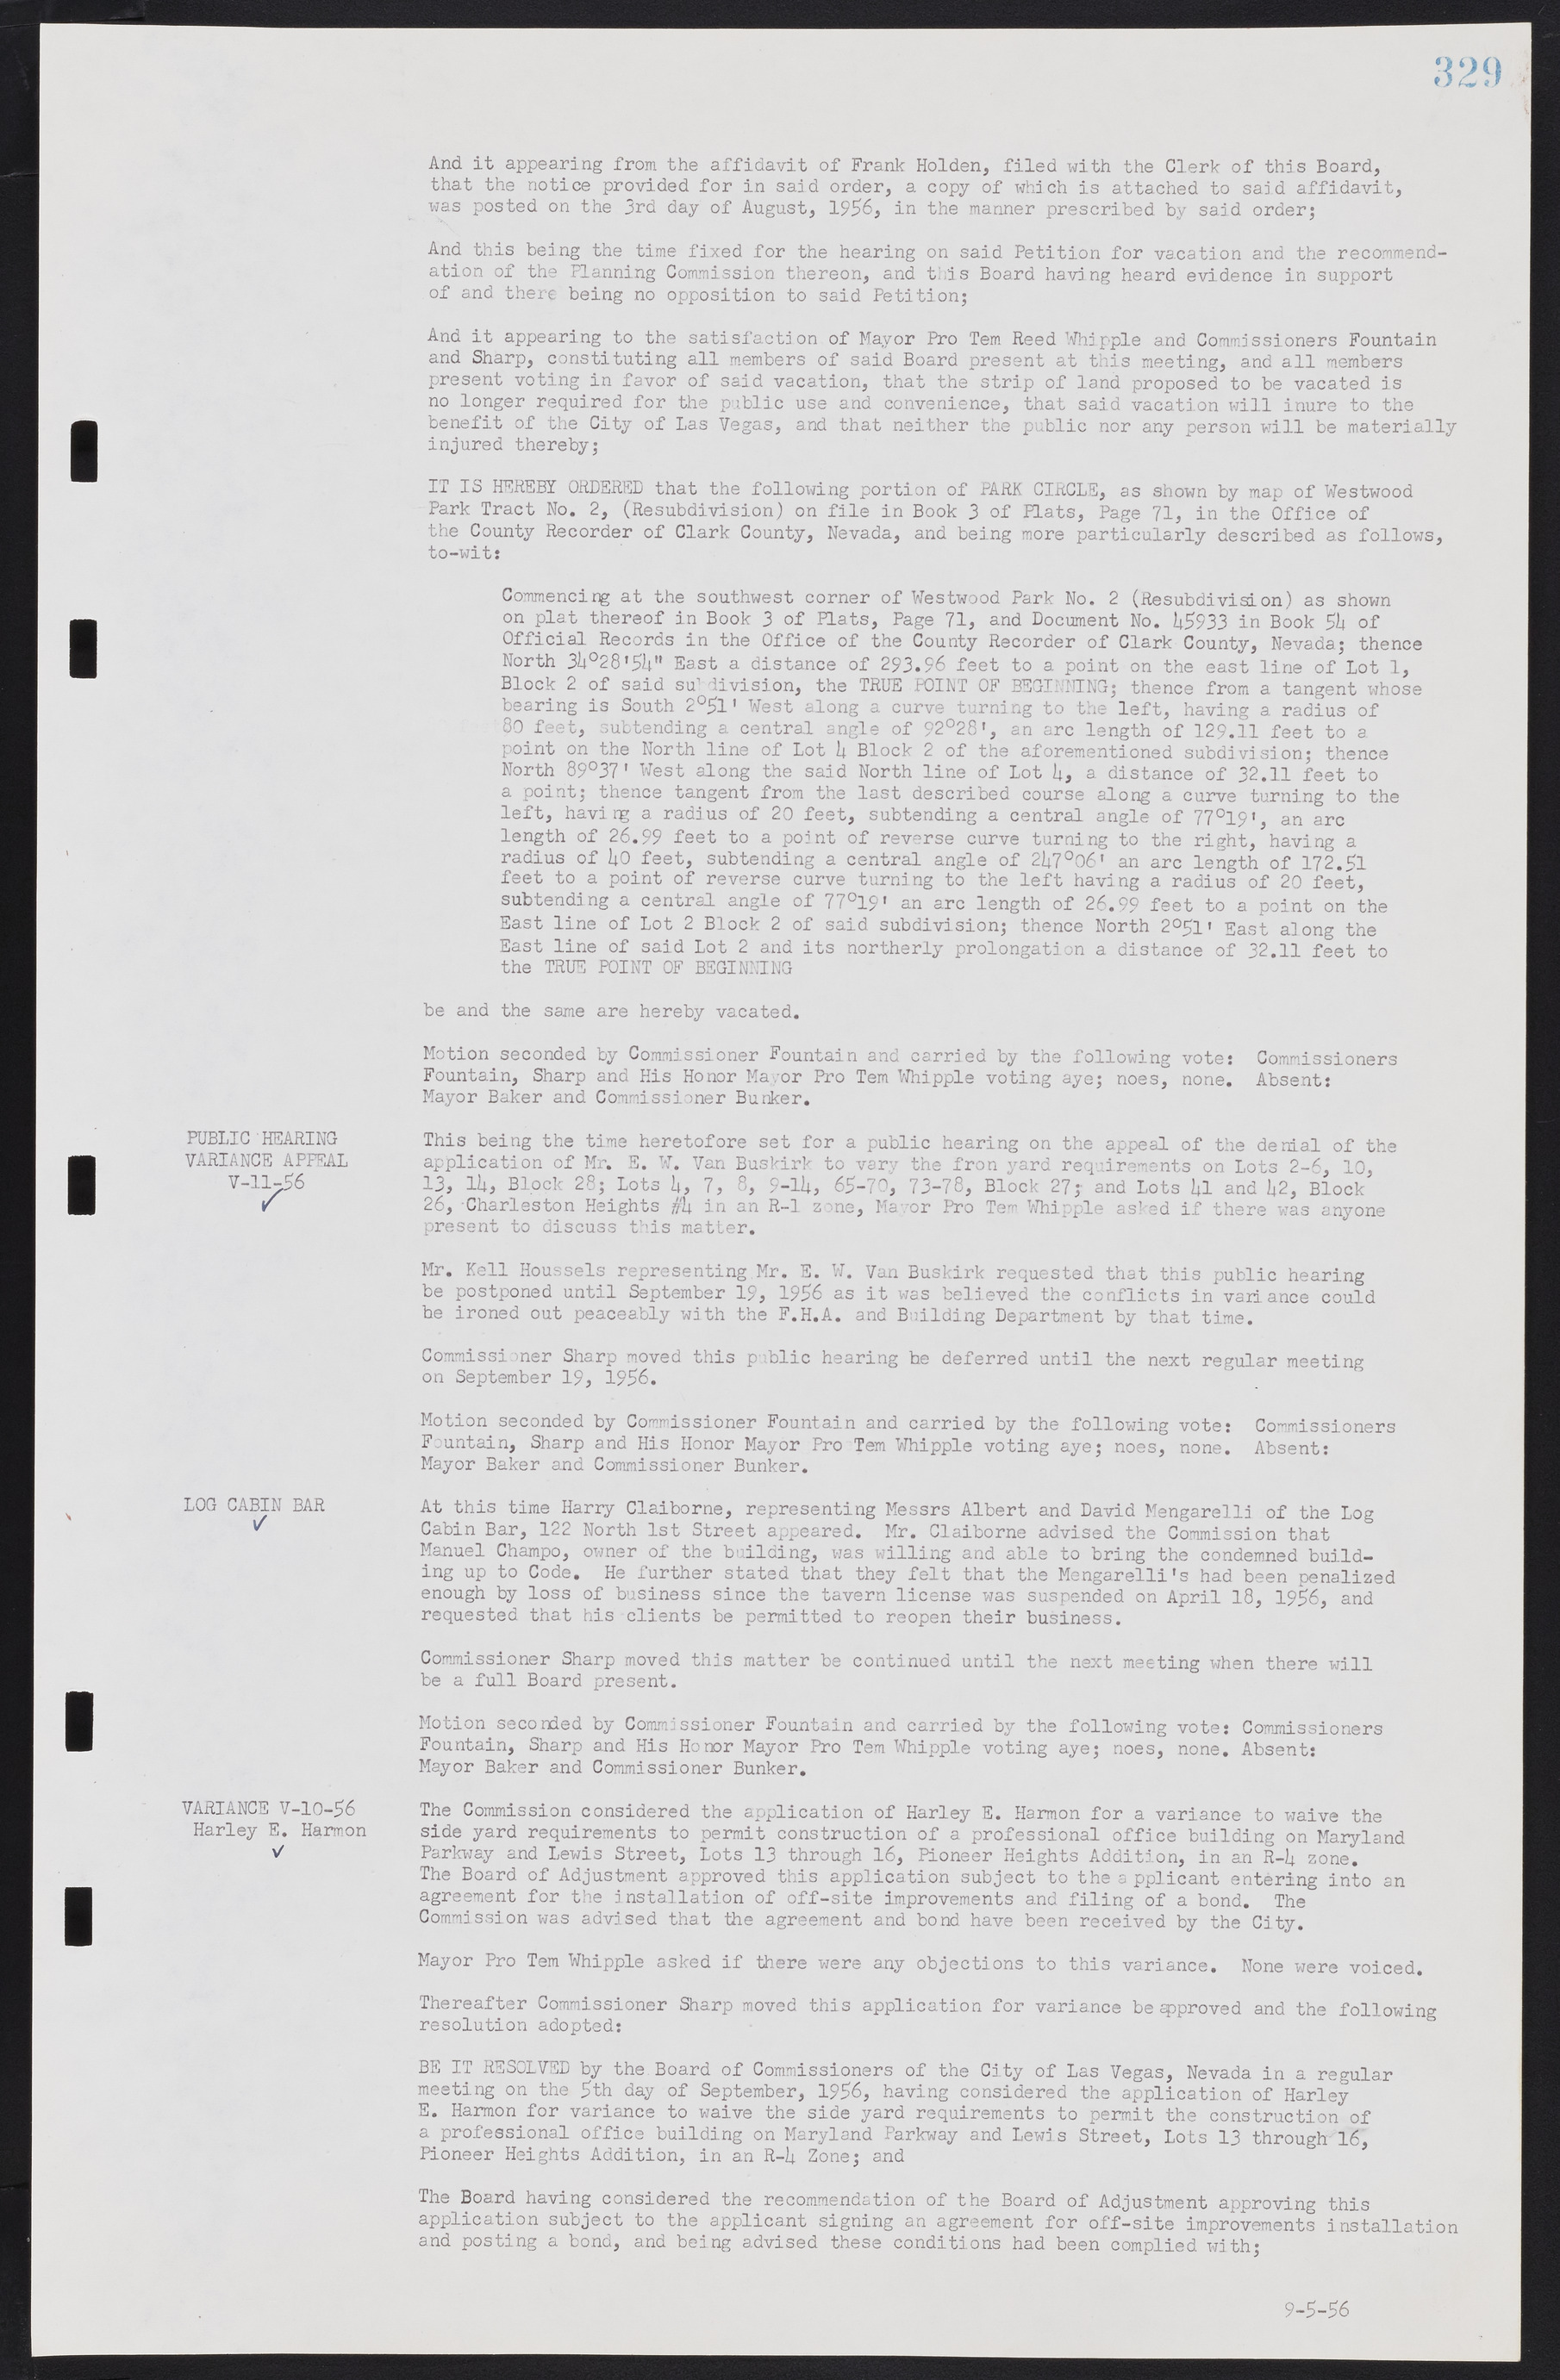 Las Vegas City Commission Minutes, September 21, 1955 to November 20, 1957, lvc000010-349